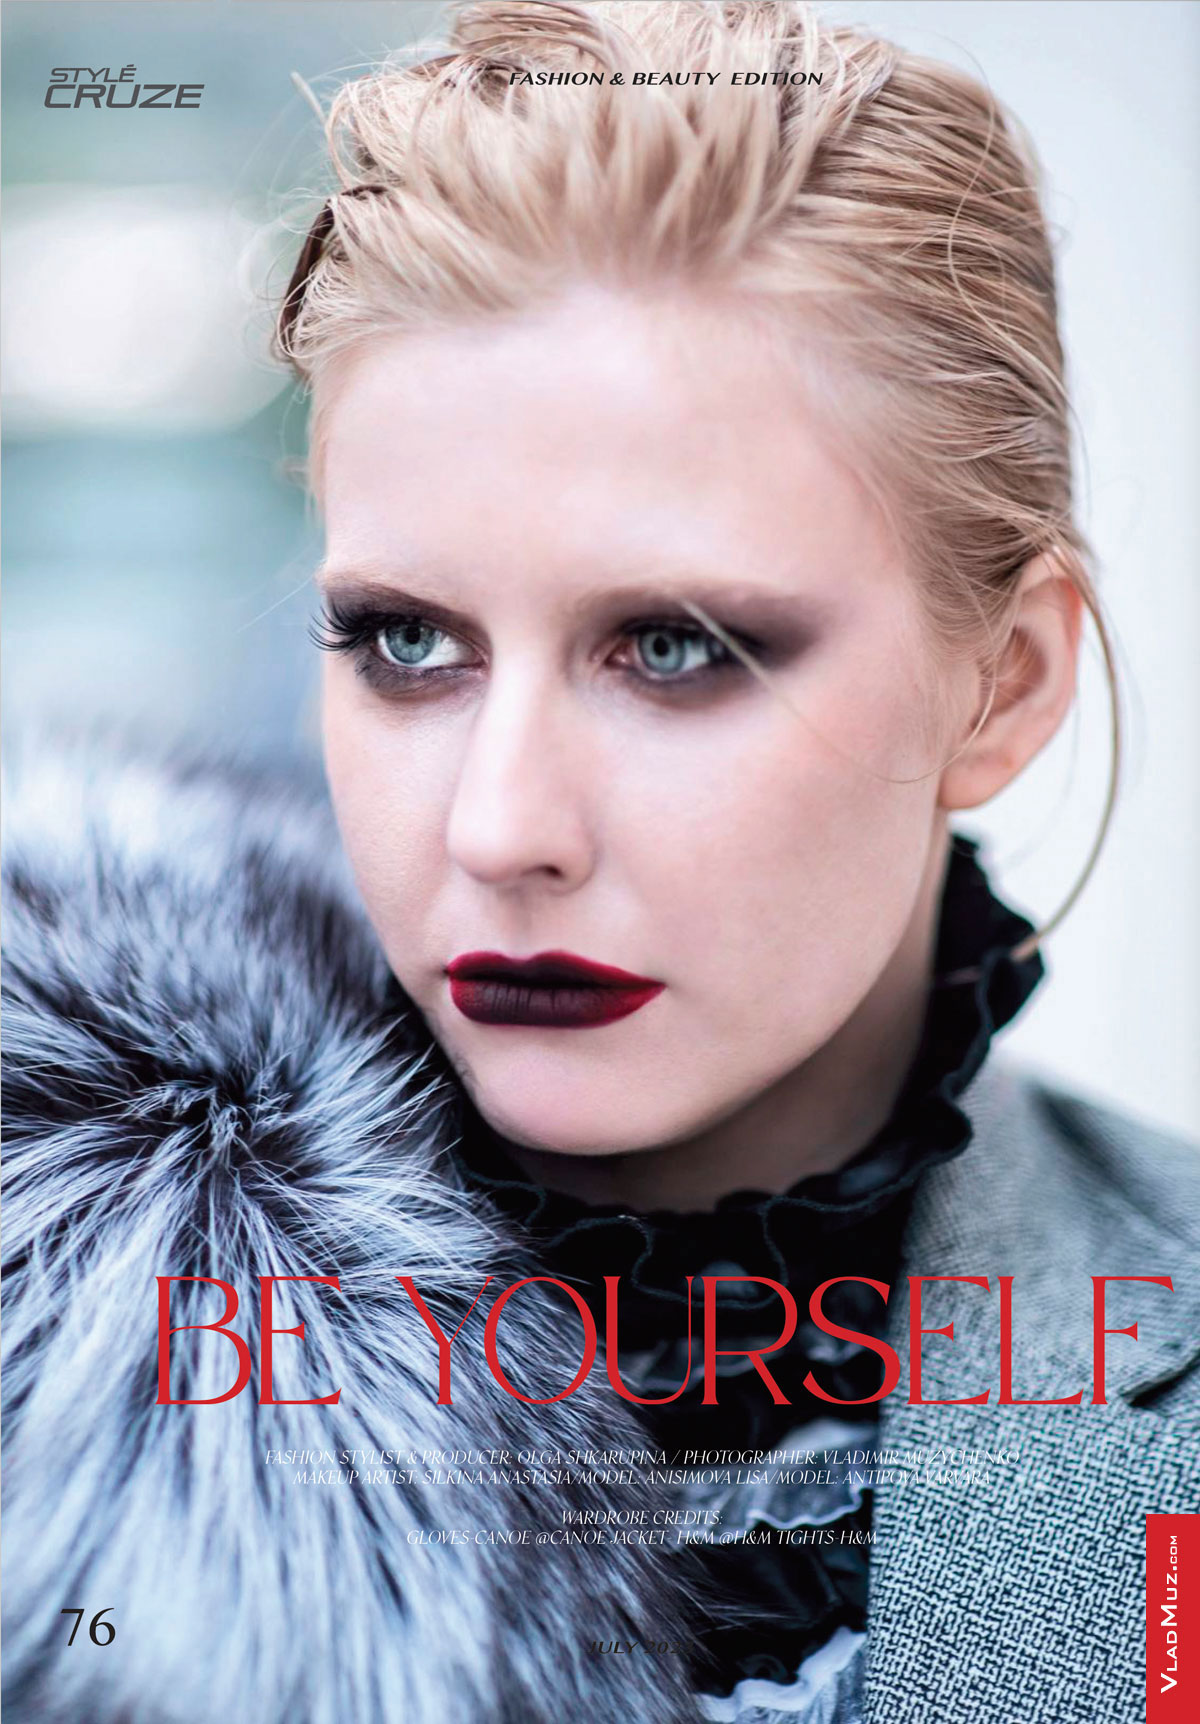 Фото девушки-модели в журнале Style Cruze Magazine под заголовком “Be Yourself” — «Будь собой»